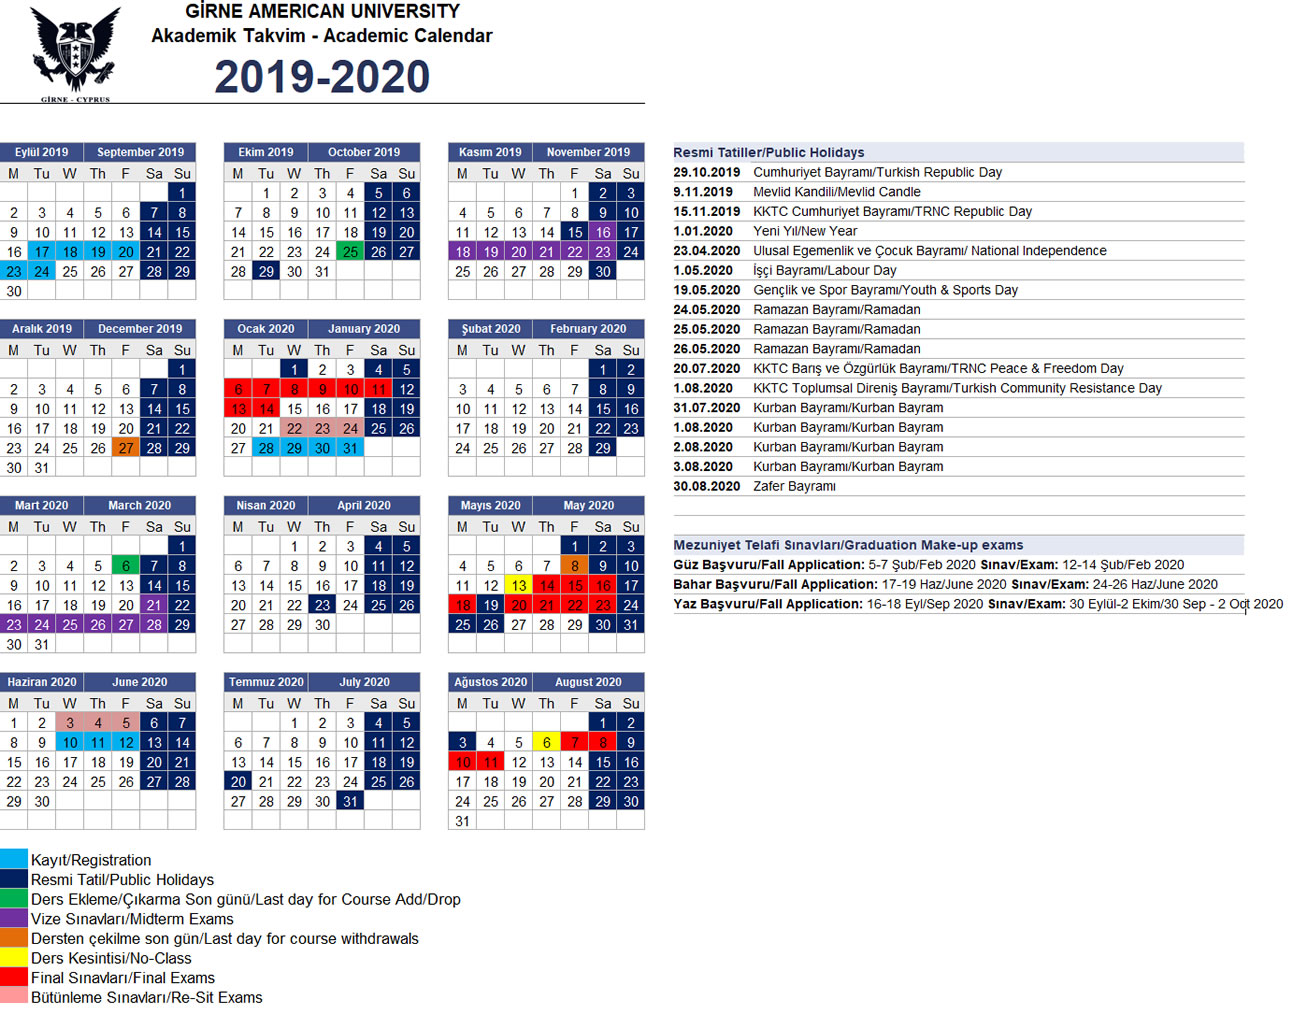 academic calendar - girne american university